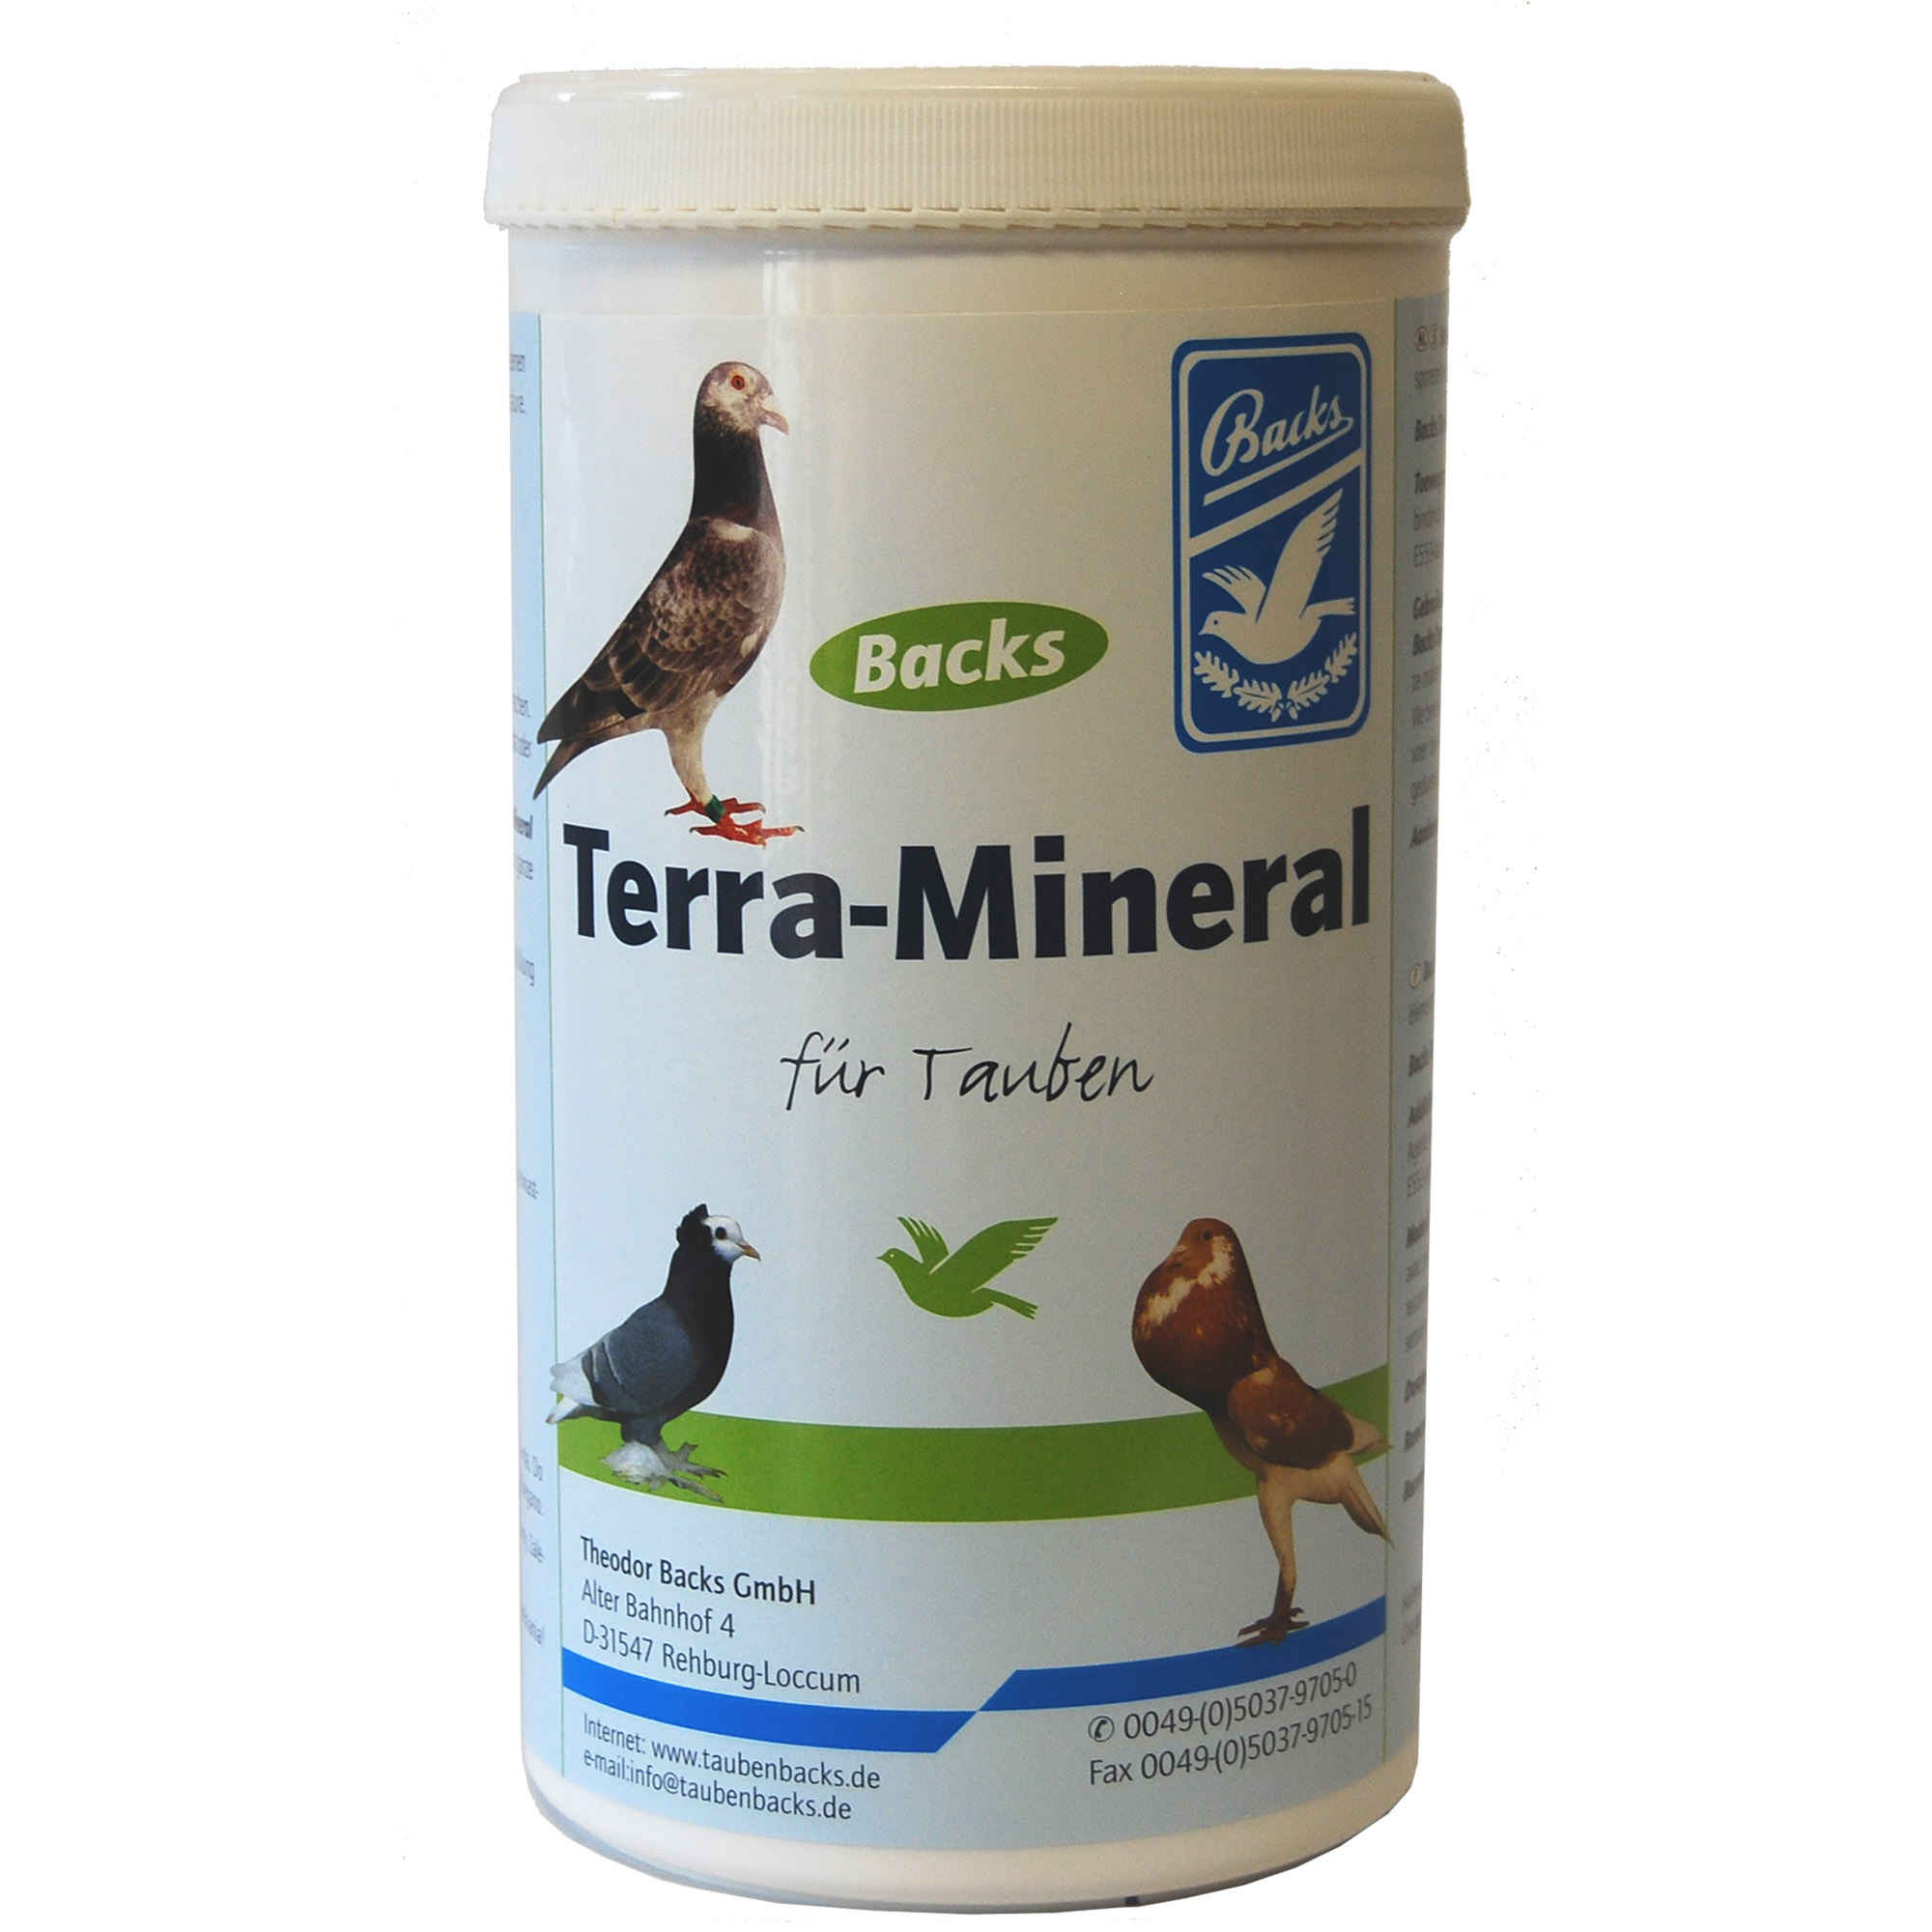 Backs Terra Mineral 1kg für Haustiere im Tierfutterpro Shop